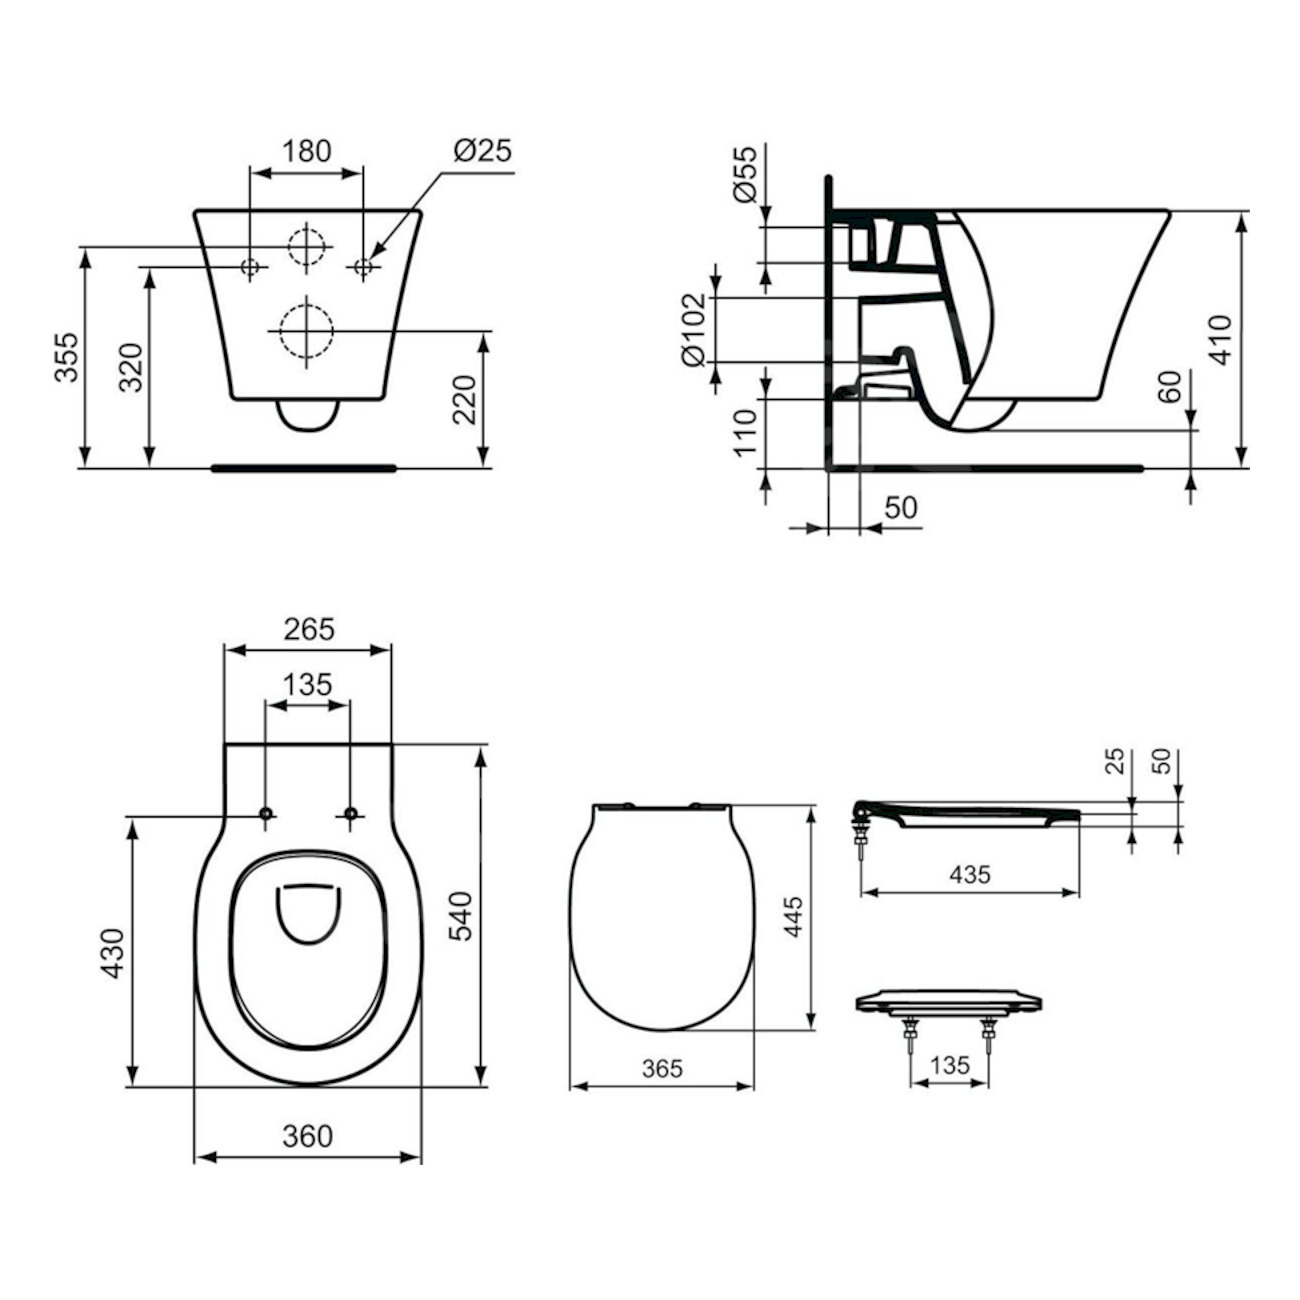 E008701 Ideal Standard Connect Air AQUABLADE viseča brezrobna WC školjka z WC desko s počasnim zapiranjem